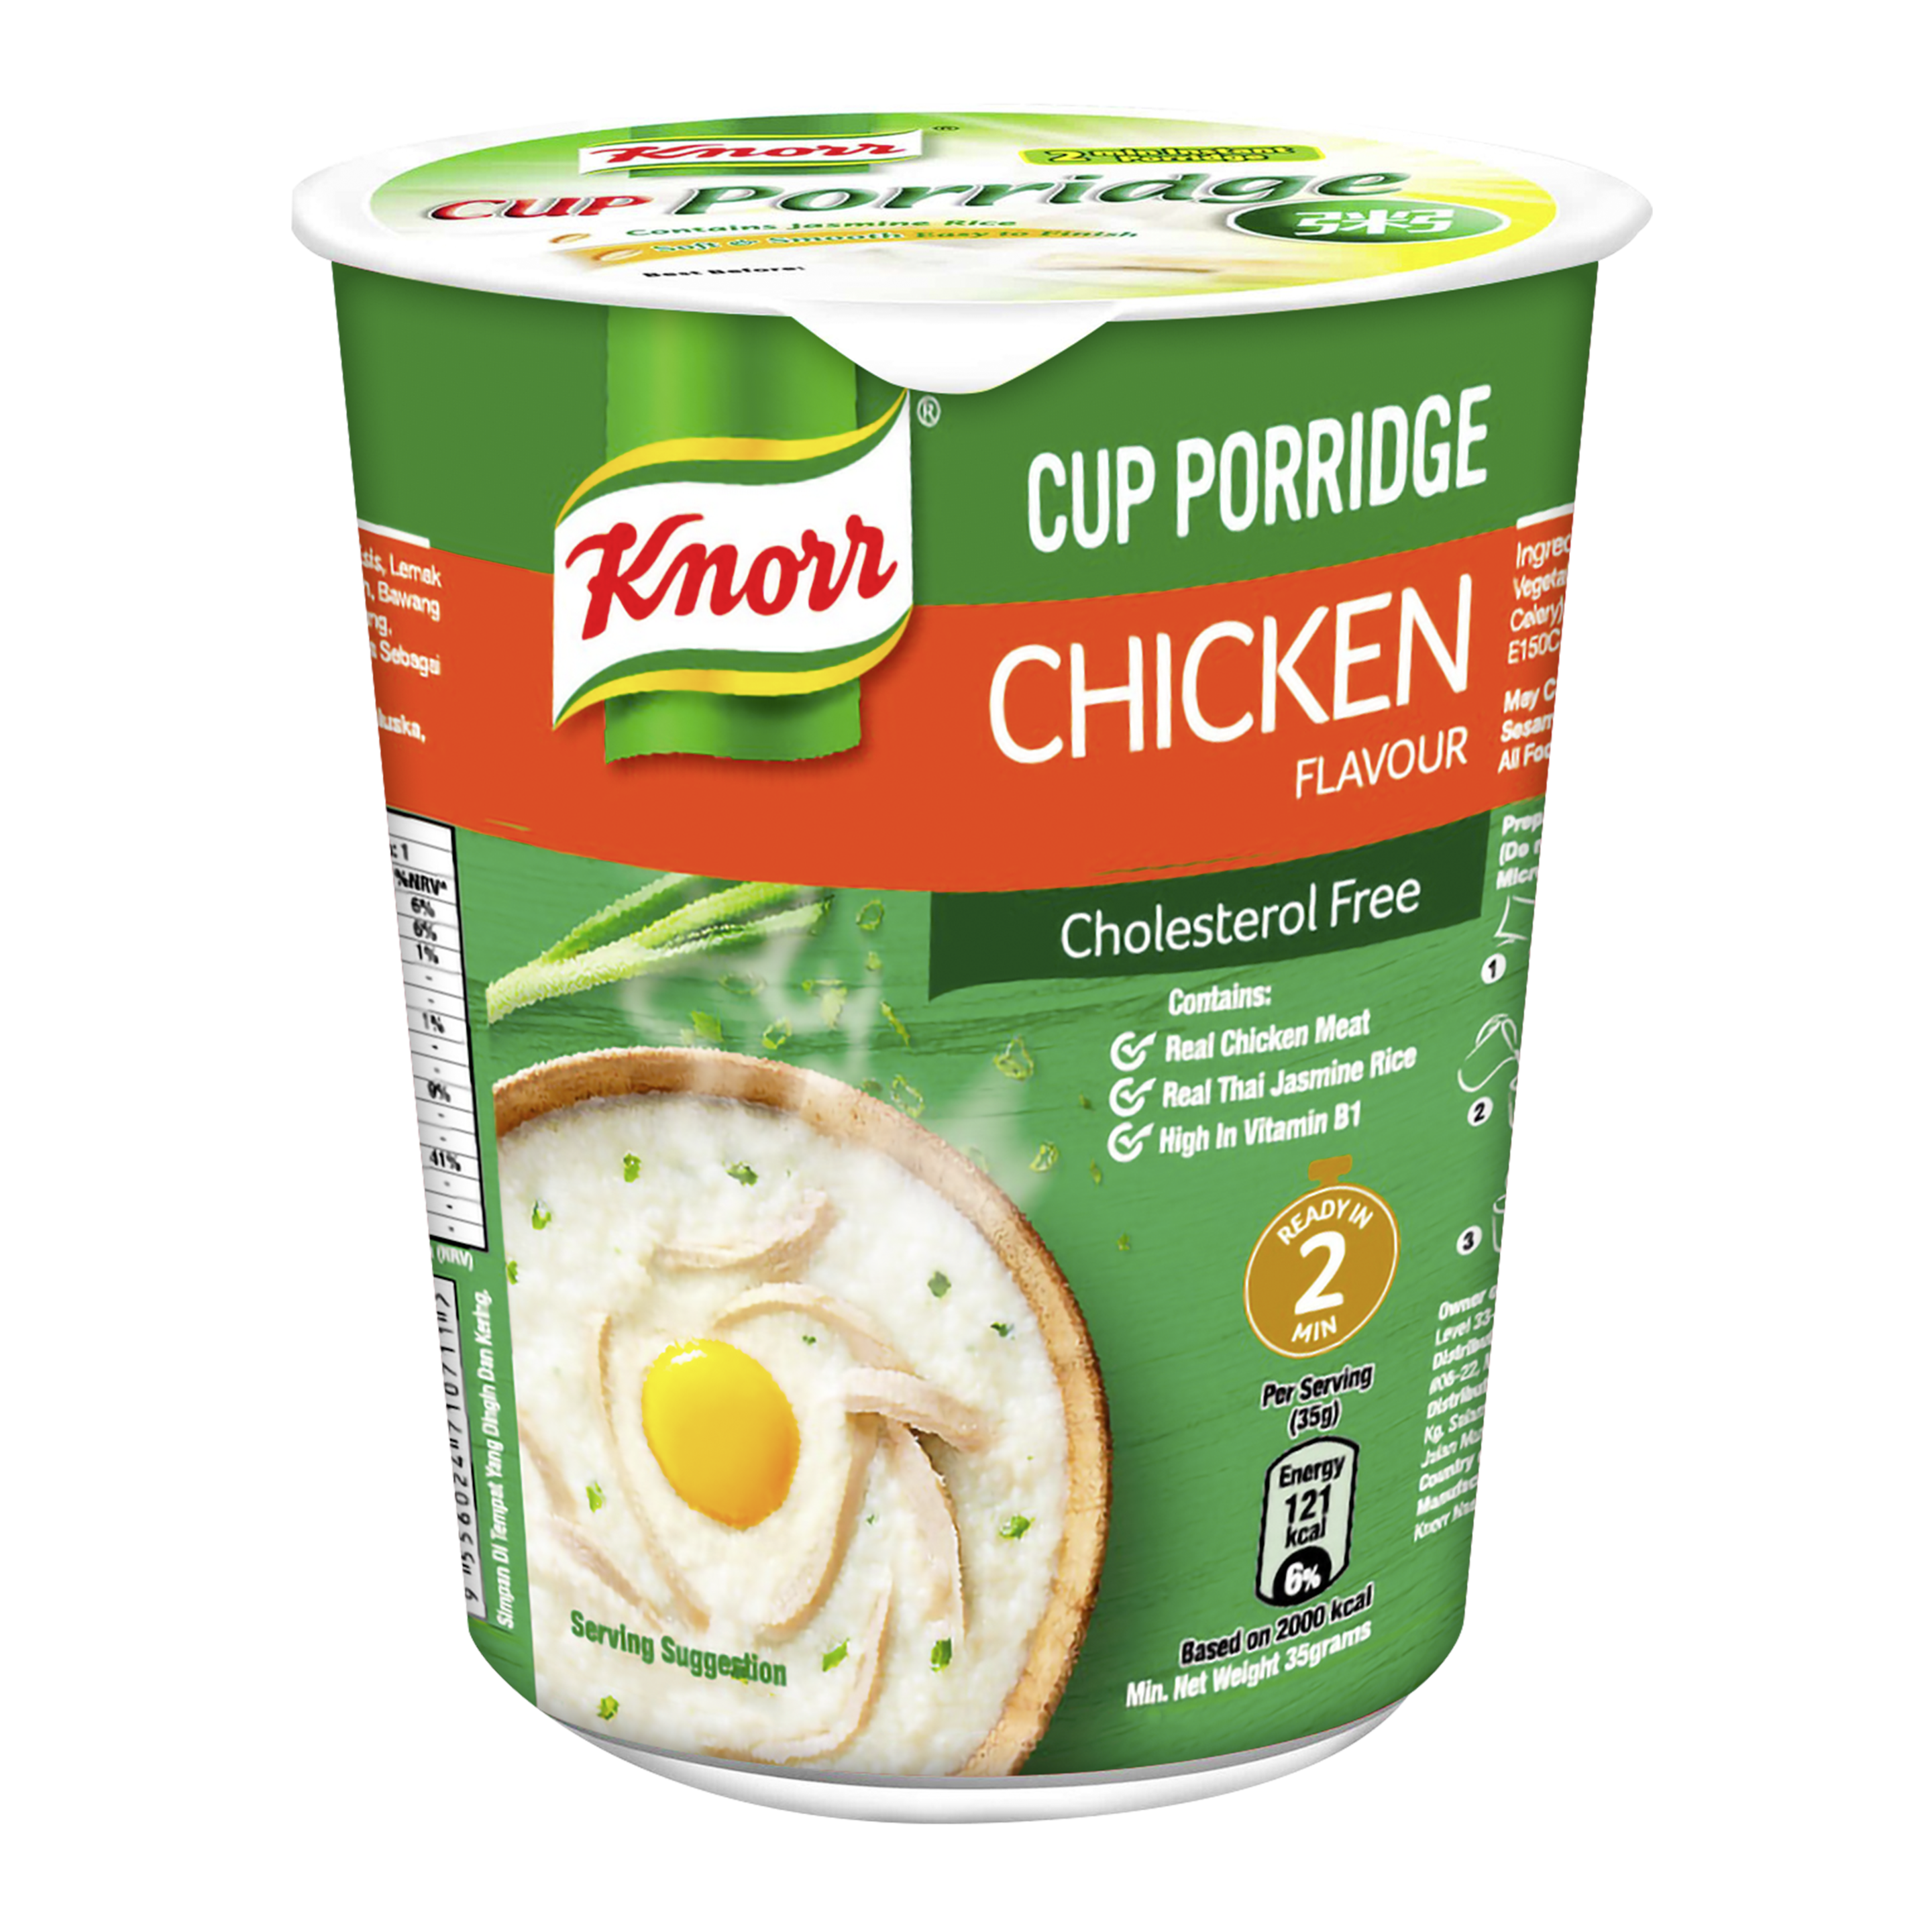 Chicken Porridge